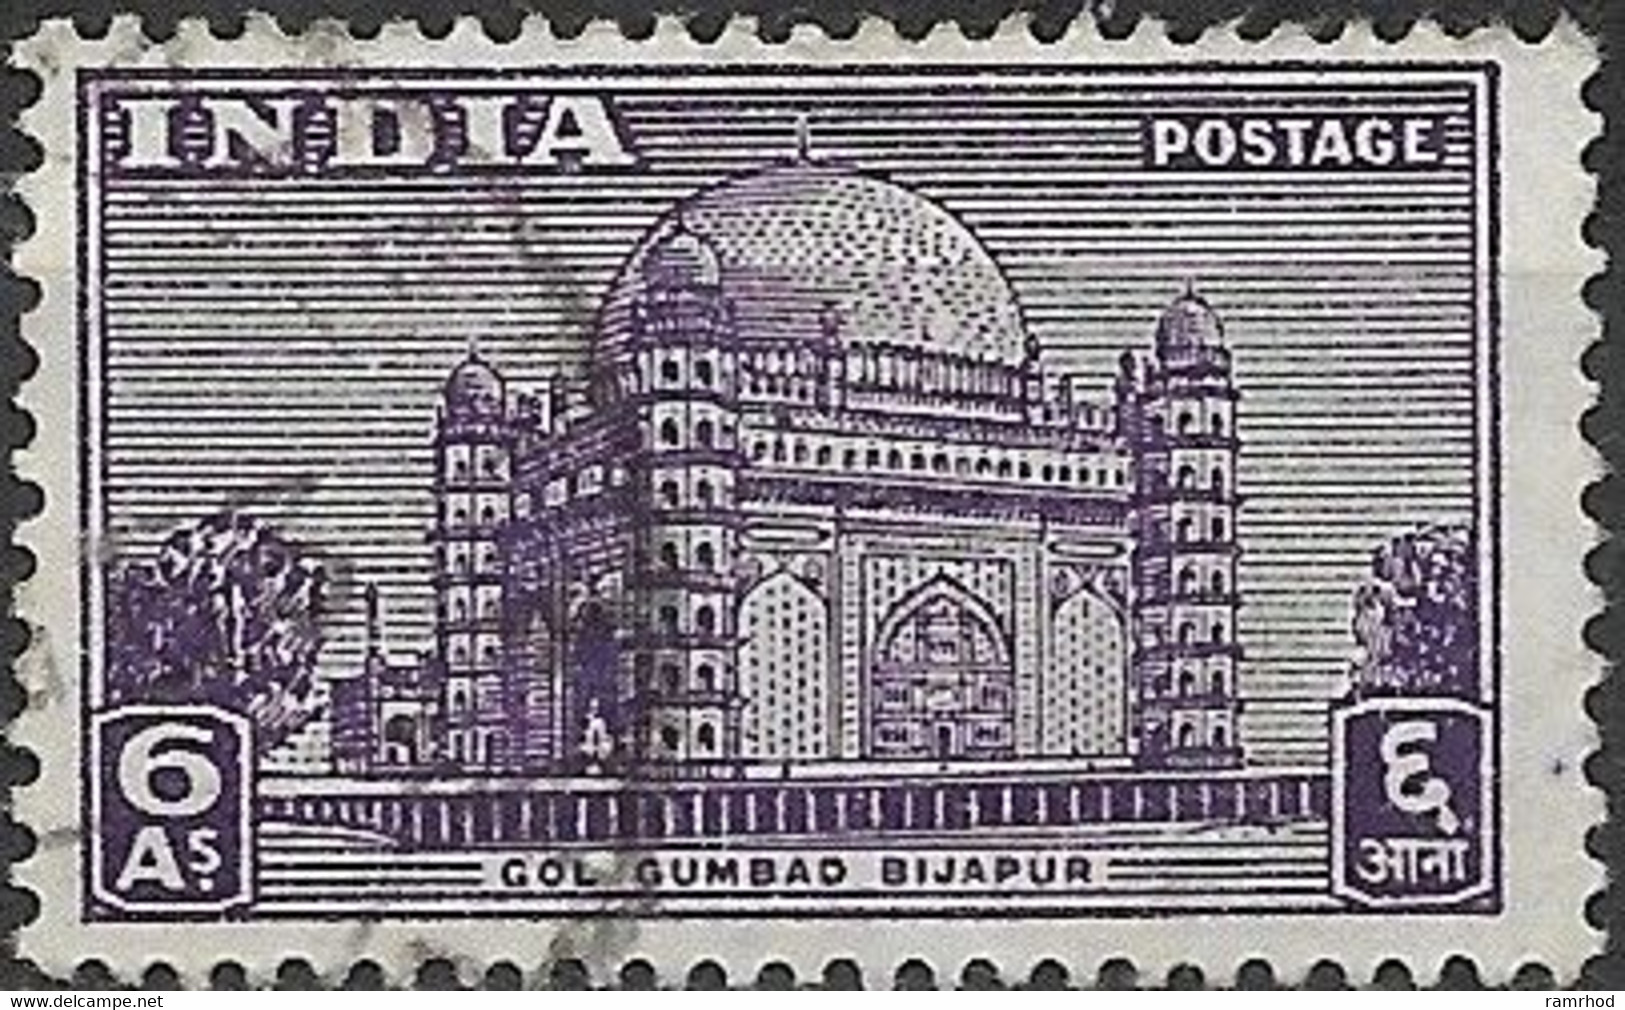 INDIA 1949 Gol Gumbad, Bijapur - 6a - Violet FU - Oblitérés